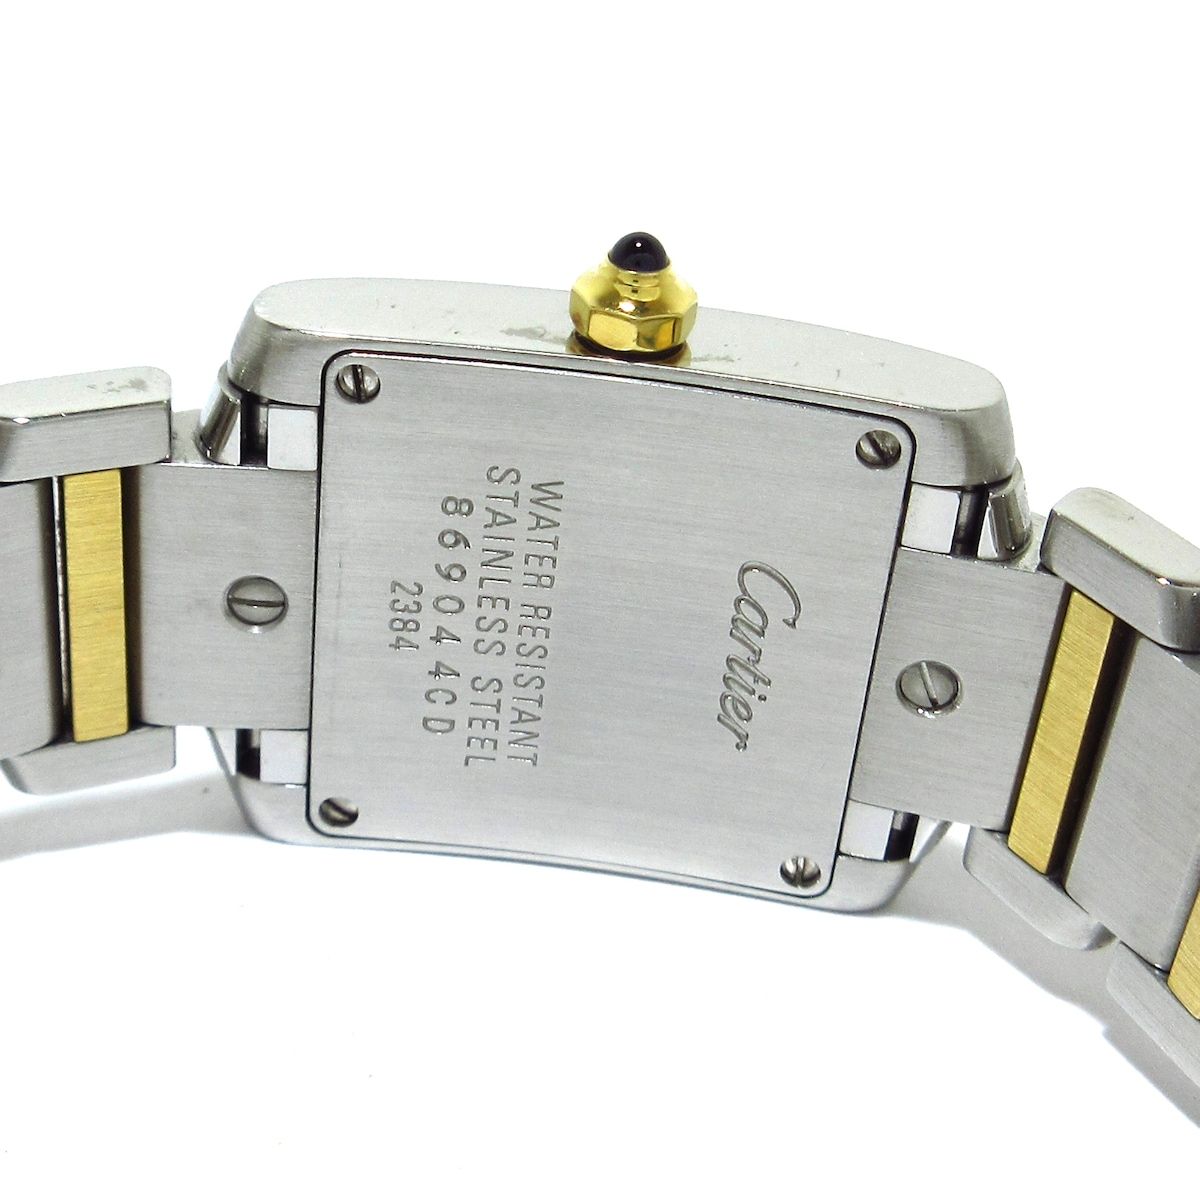 Cartier(カルティエ) 腕時計美品 タンクフランセーズSM W51007Q4 レディース SS×K18YG 白 - メルカリ